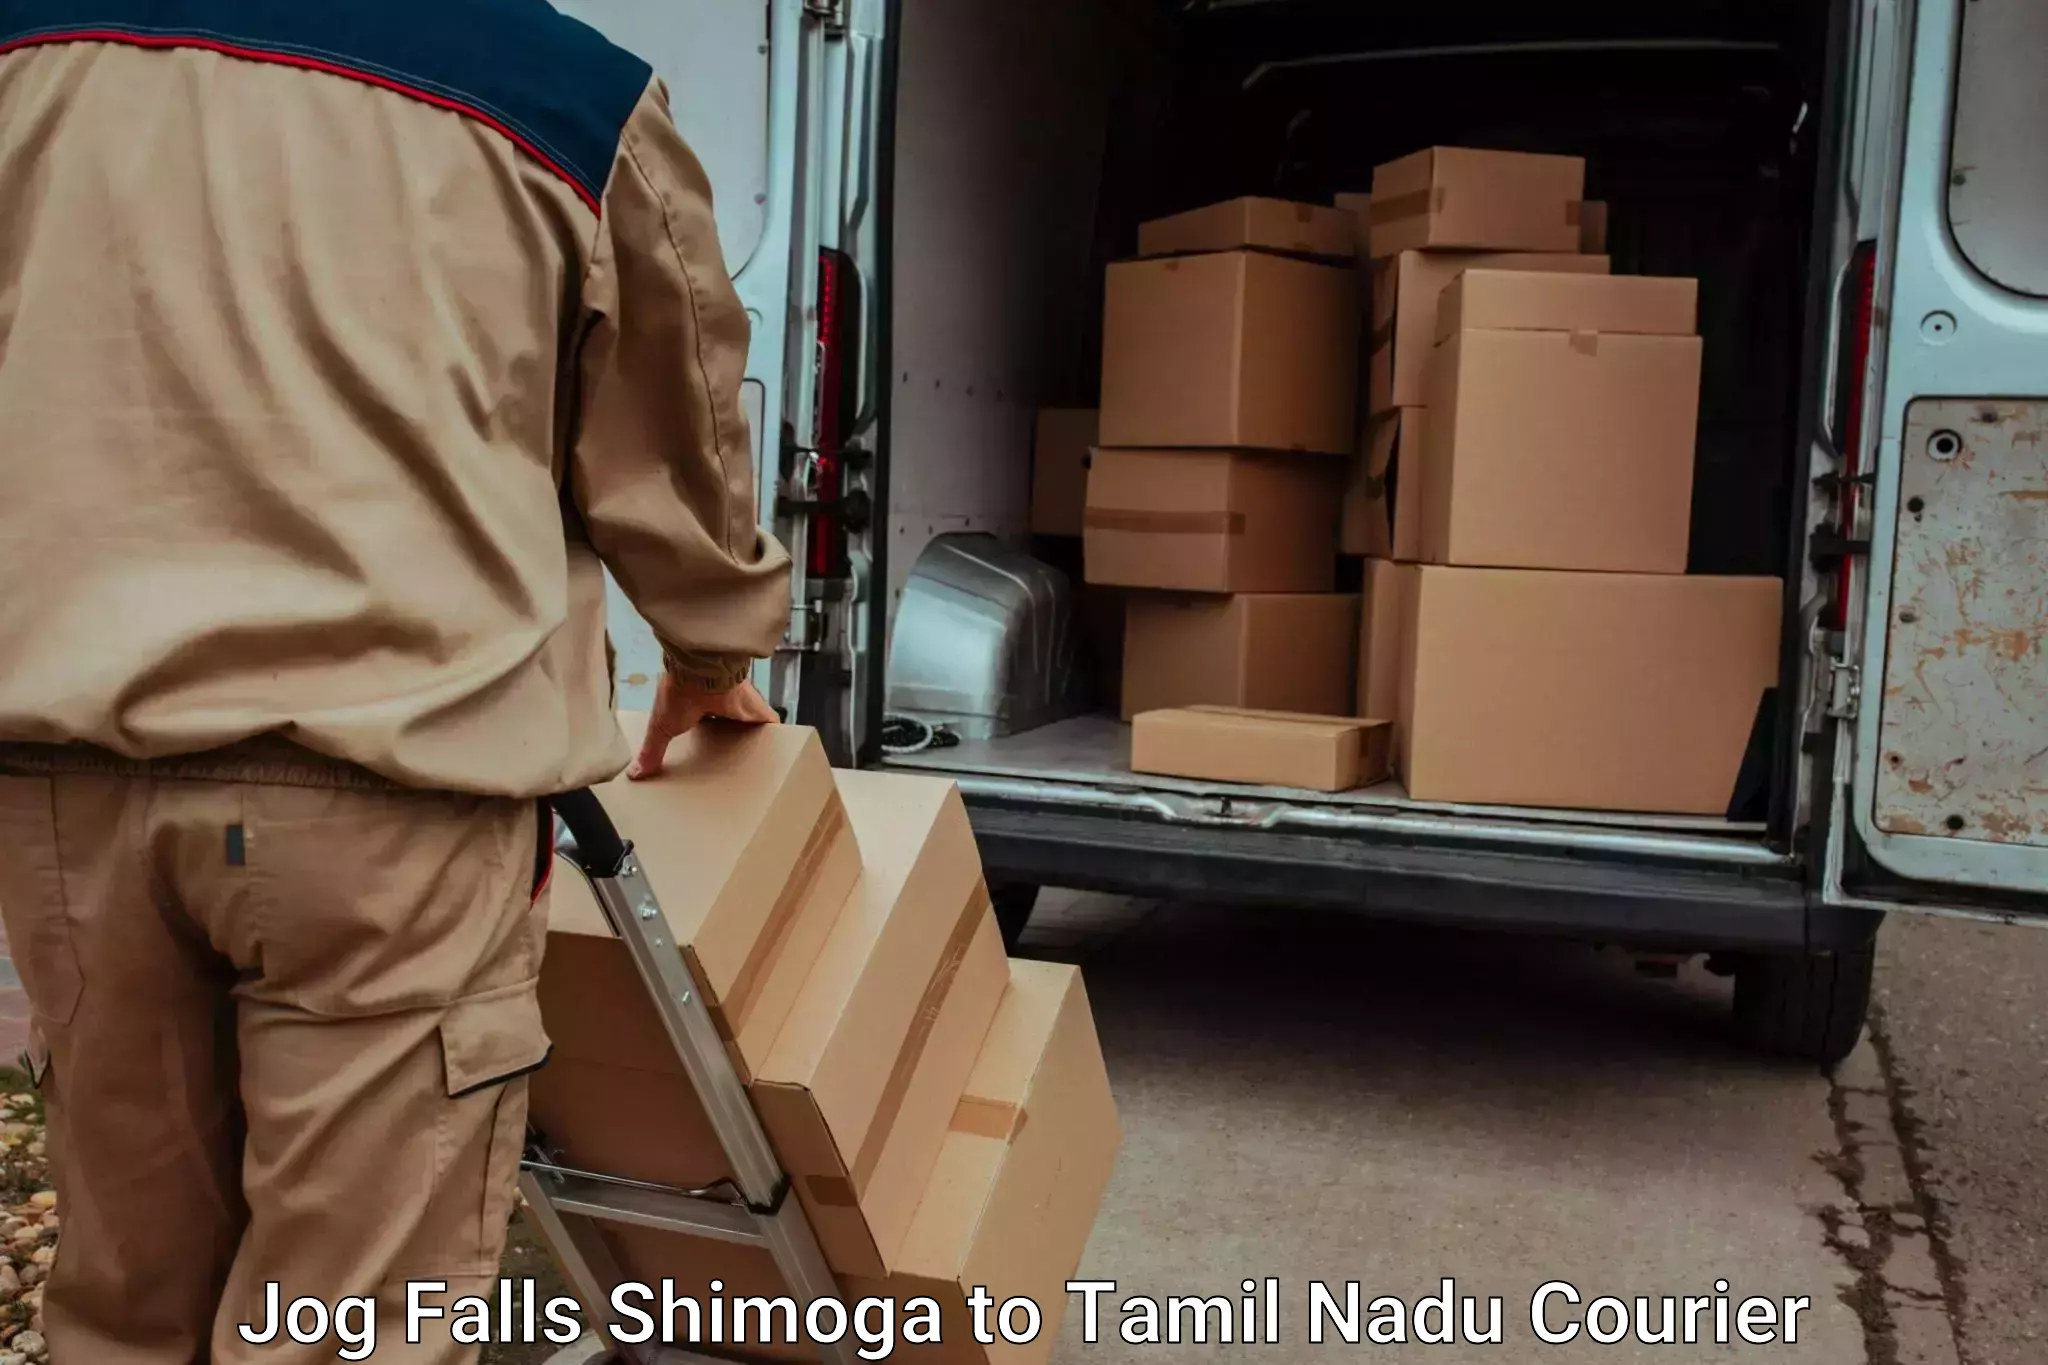 Budget-friendly movers Jog Falls Shimoga to Palladam